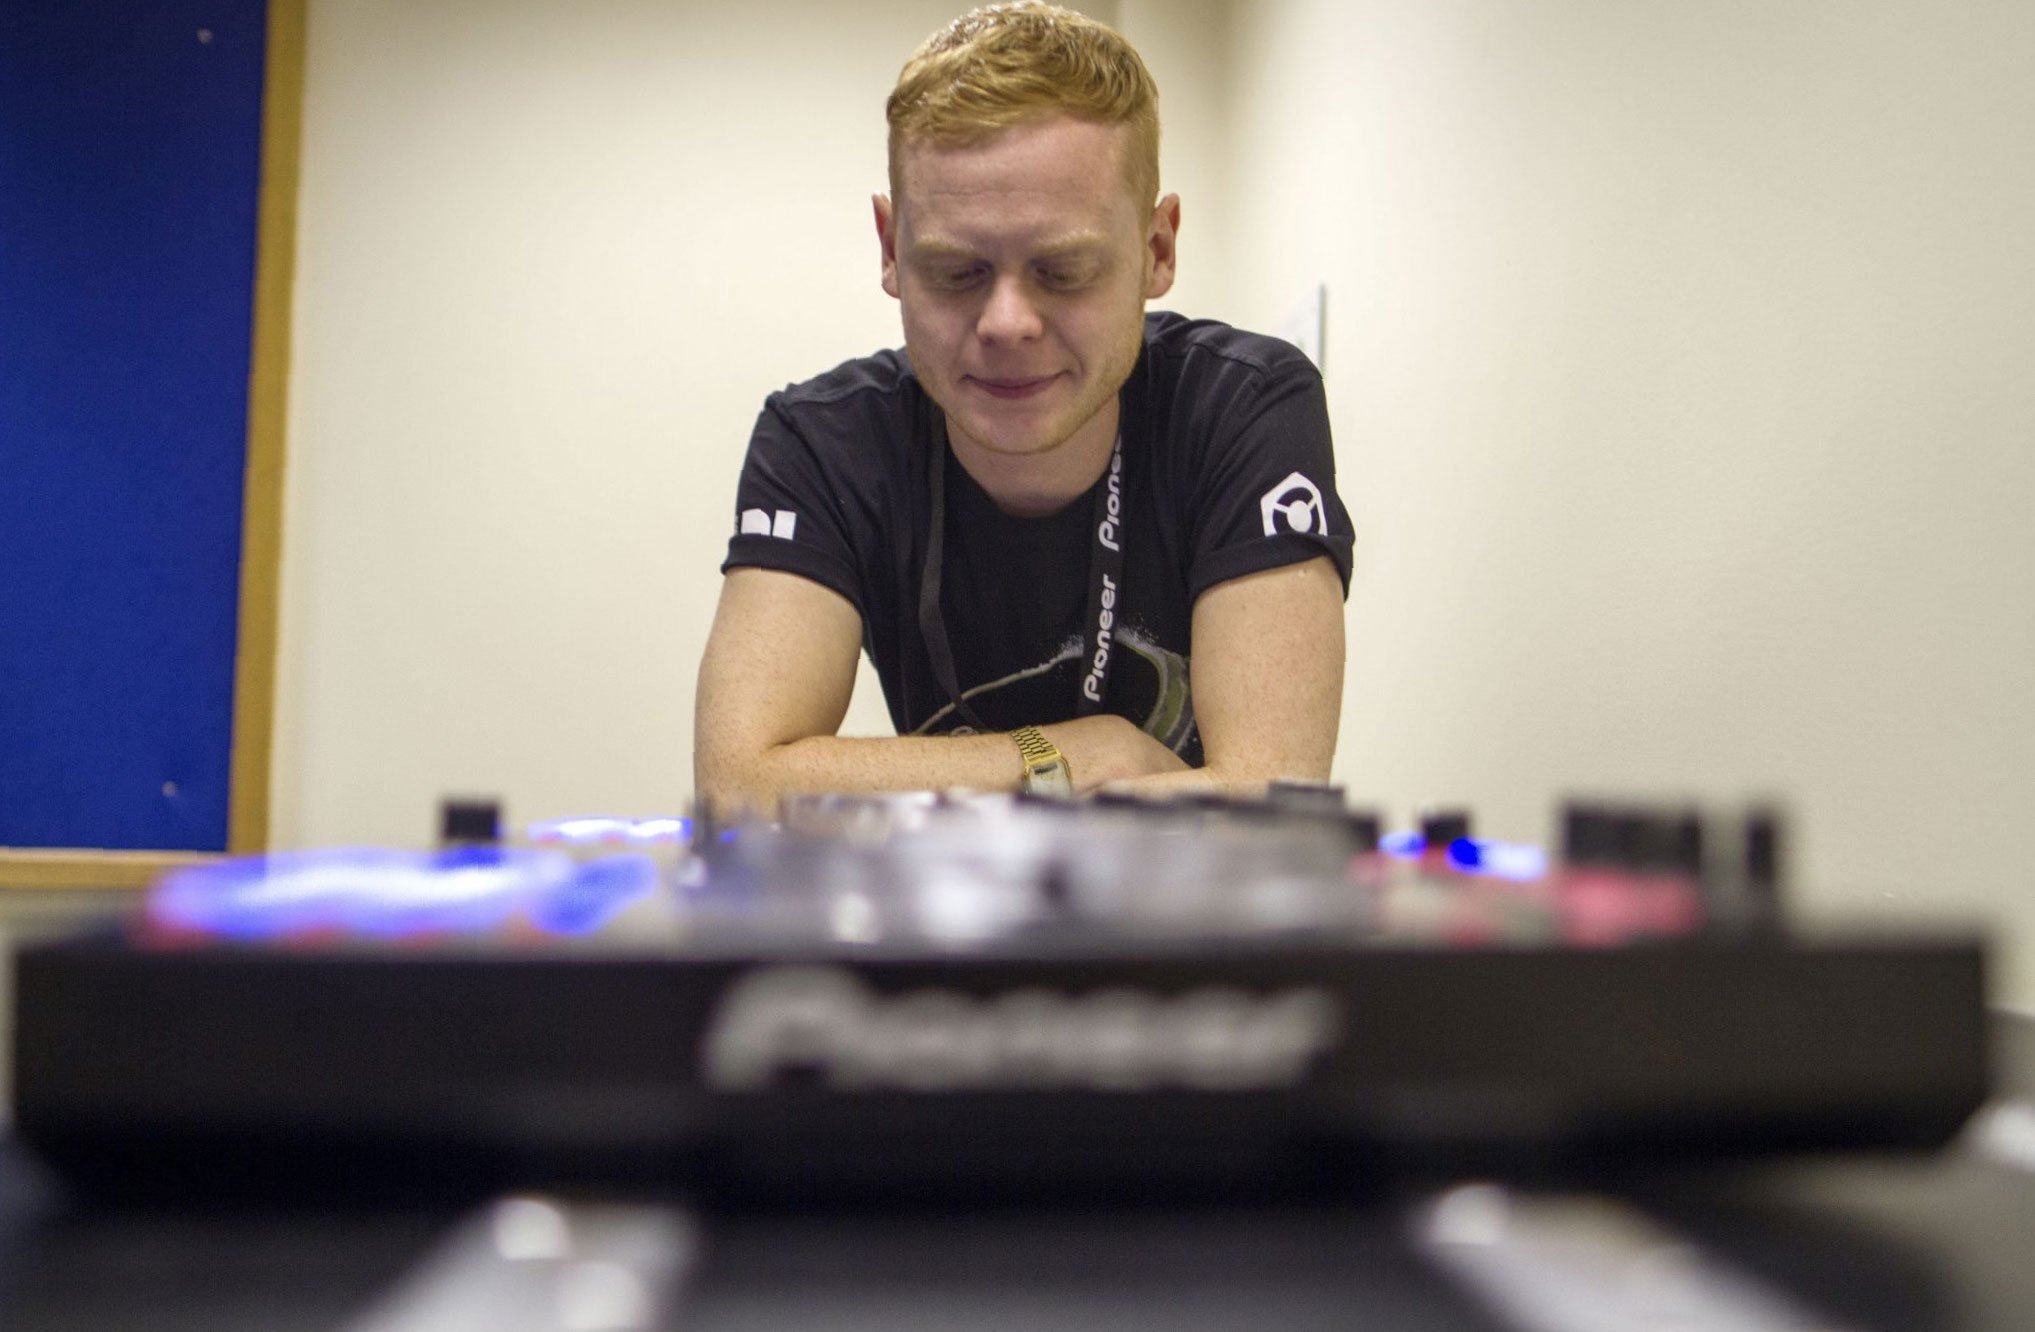 INDUSTRY MOVES: Pioneer DJ's Rik Parkinson moves to Denon DJ